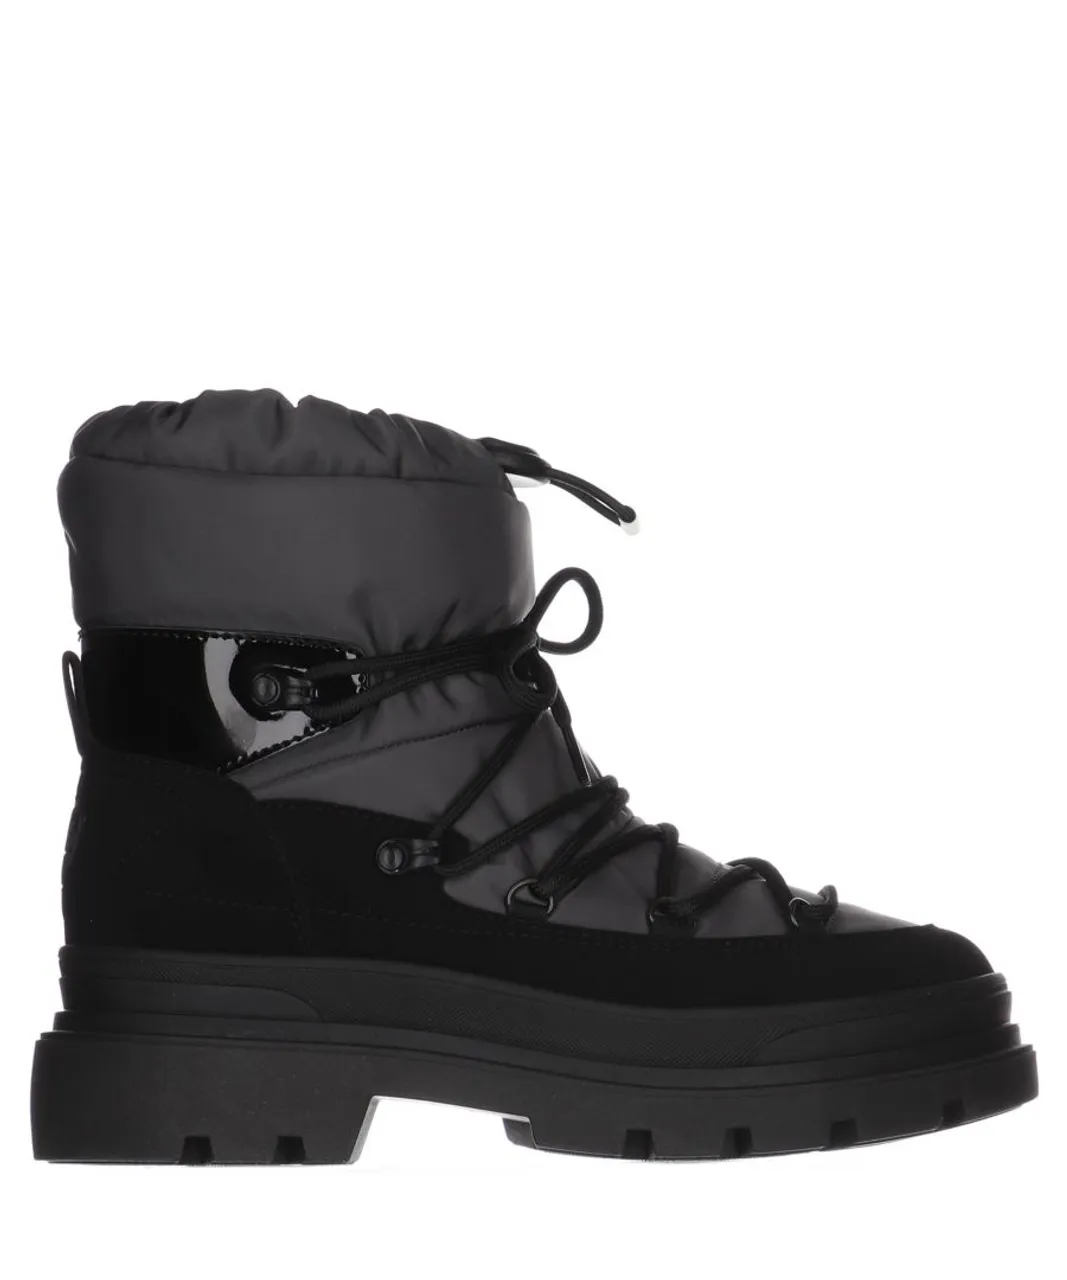 Pajar Womens Vantage Anthracite Snow Boots - Dark Grey